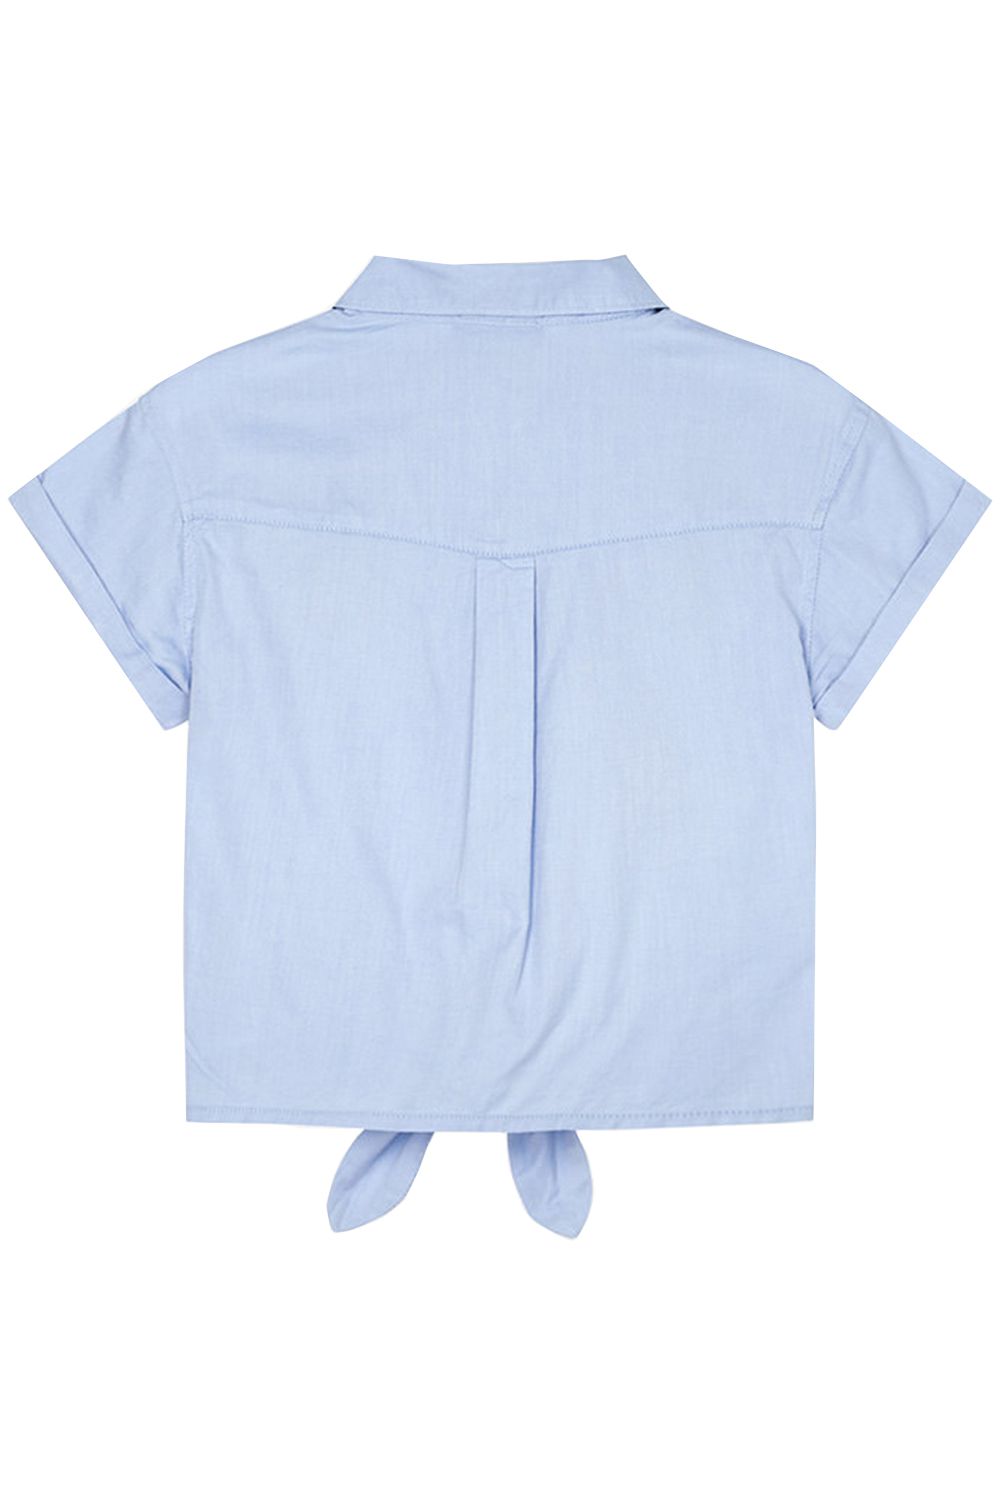 Блуза Mayoral, размер 162, цвет голубой 6.104/60 - фото 3